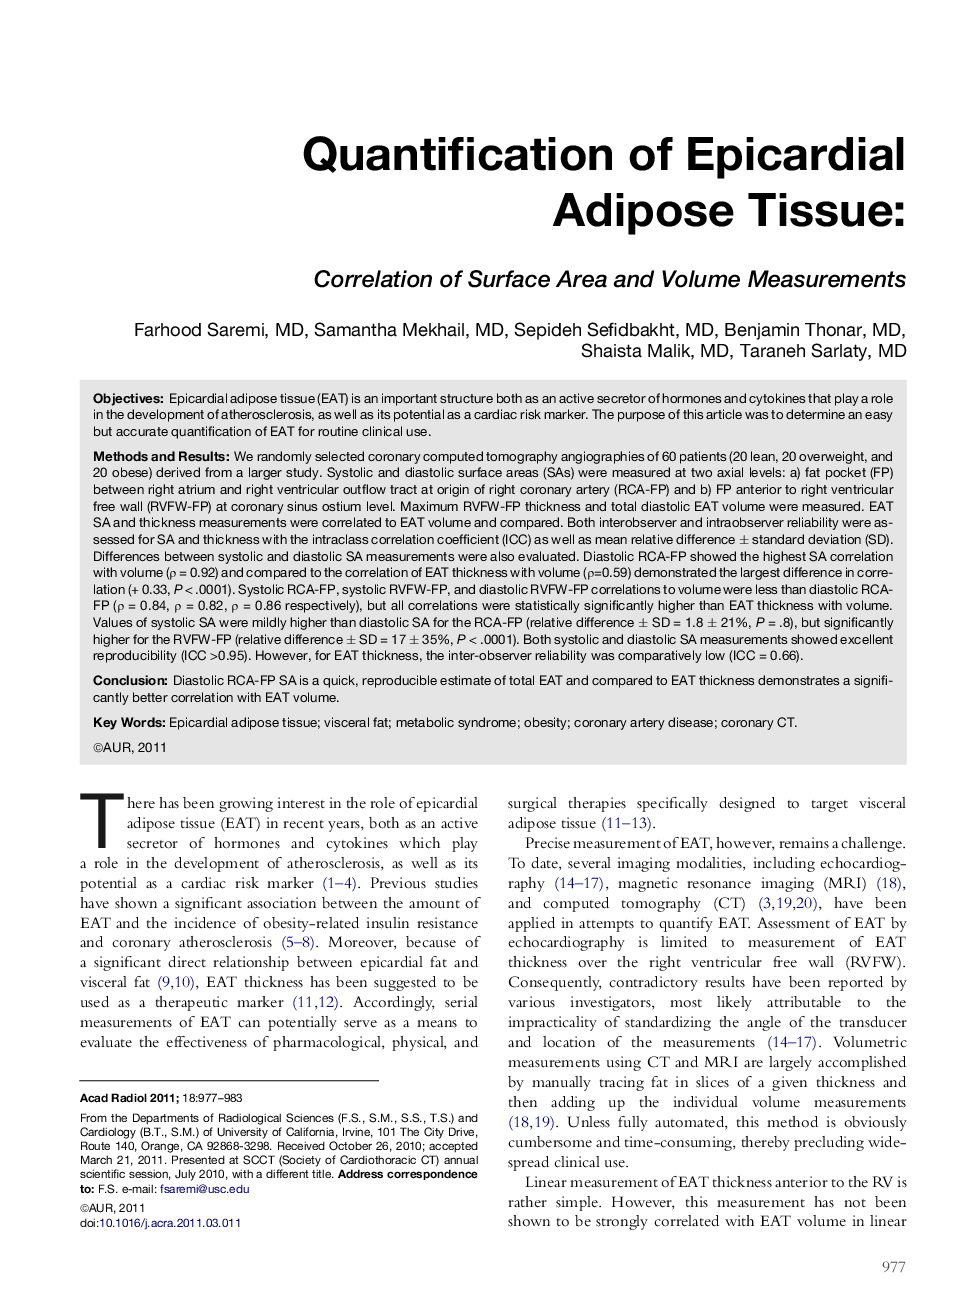 Quantification of Epicardial Adipose Tissue